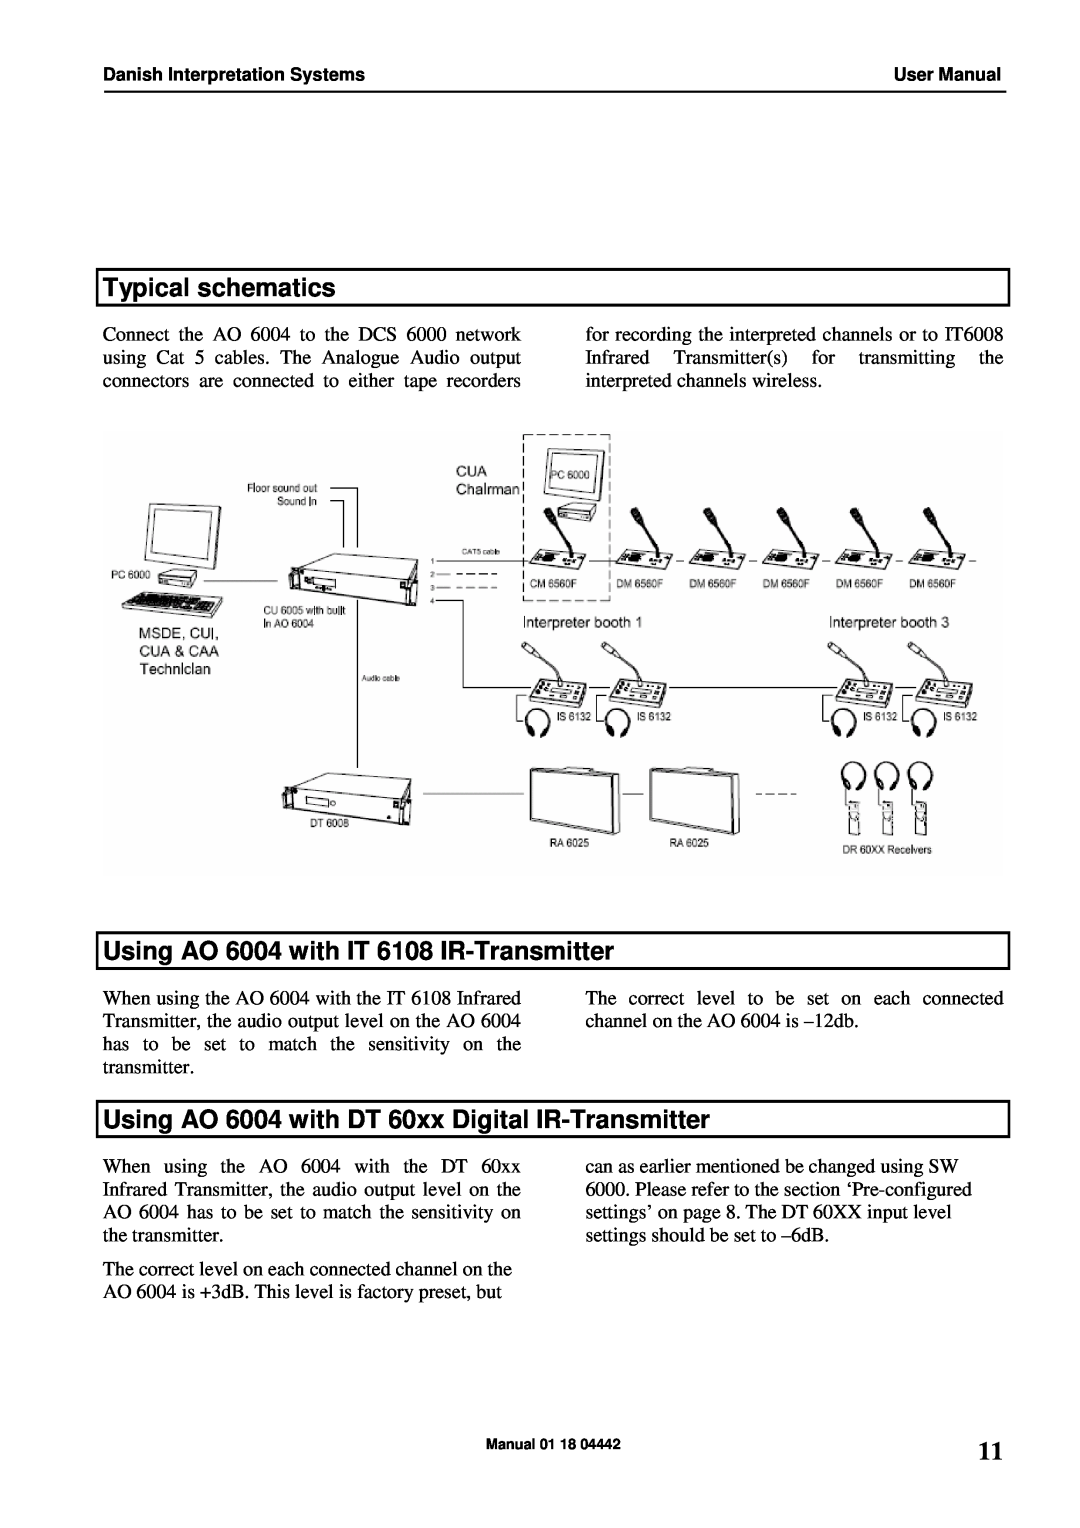 Listen Technologies user manual Typical schematics, Using AO 6004 with IT 6108 IR-Transmitter 